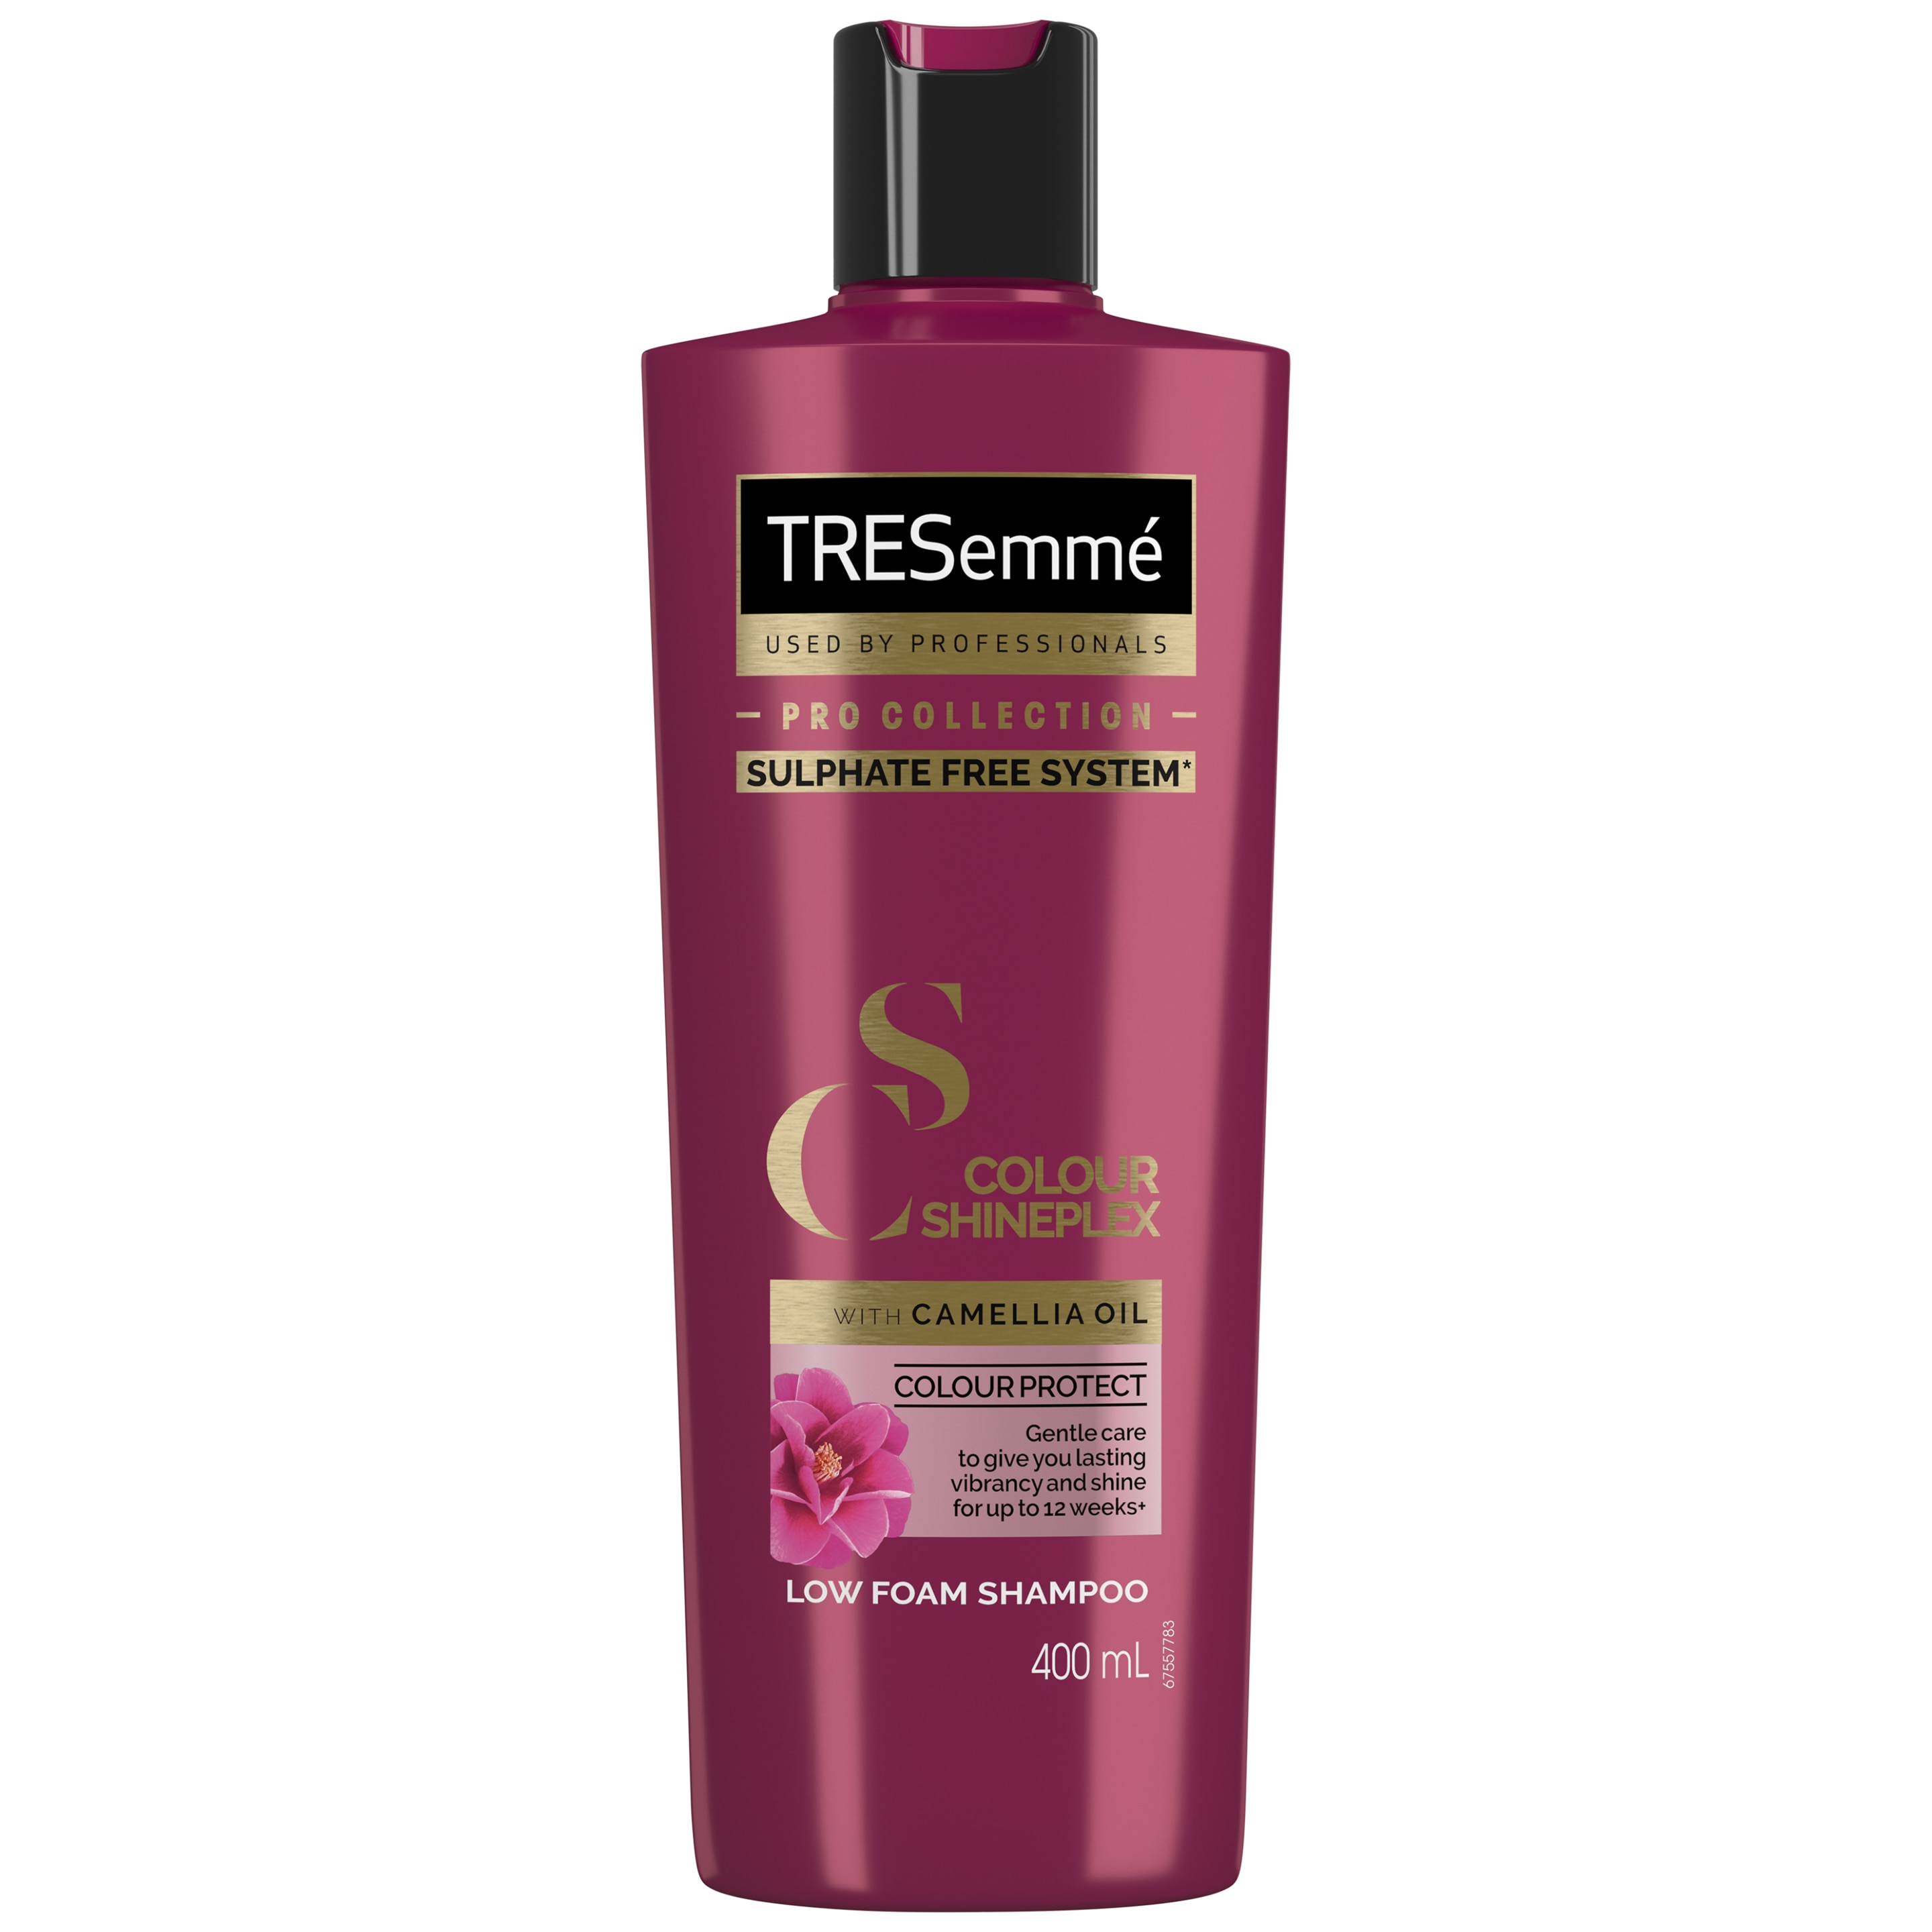 A 400ml bottle of TRESemmé Colour Revitalise Shampoo front of pack image